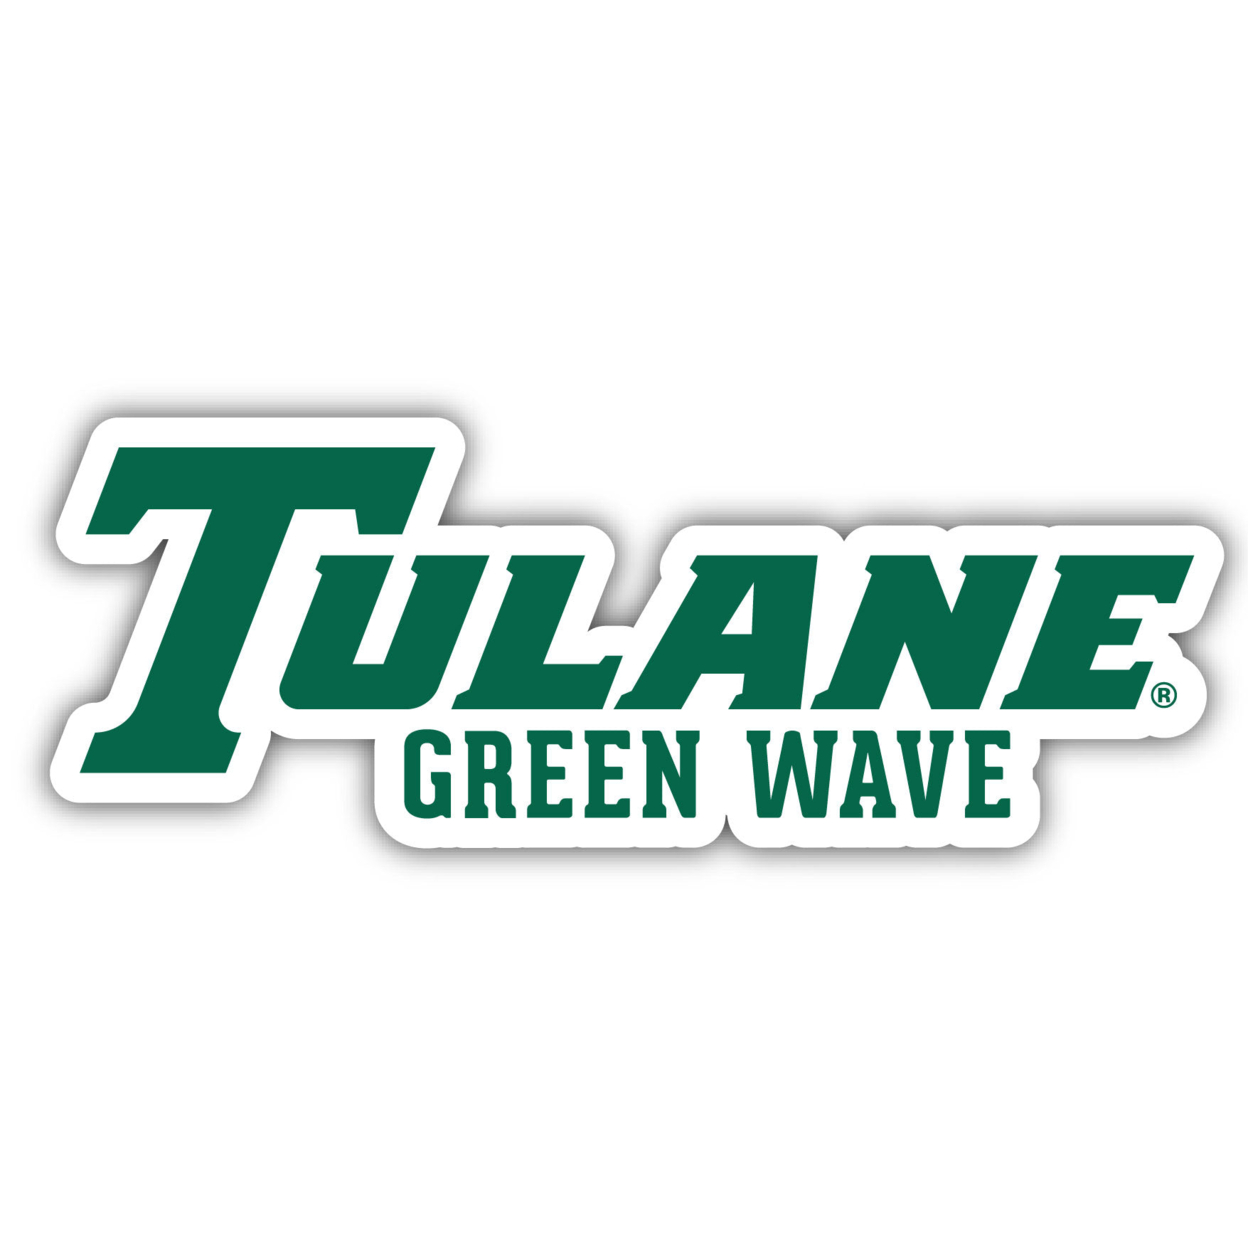 Tulane University Green Wave 4 Inch Vinyl Decal Sticker